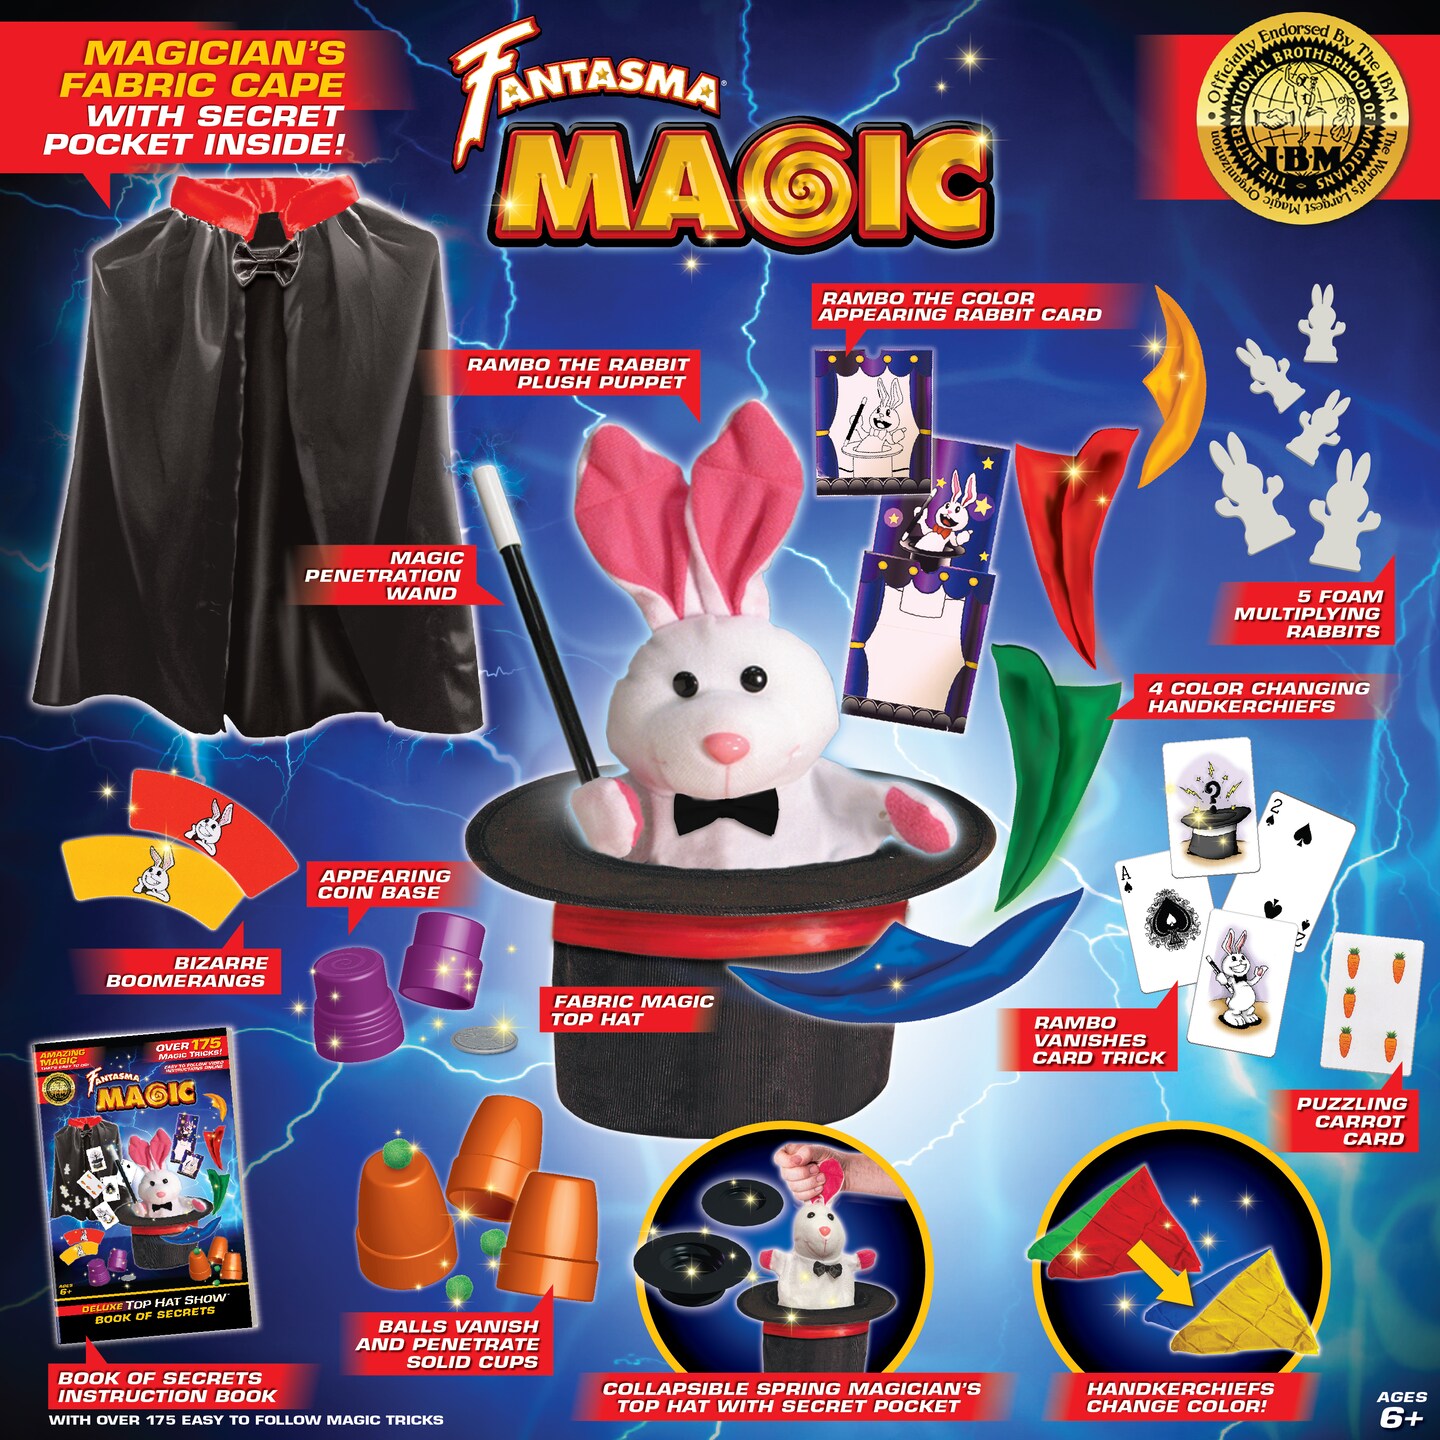 Fantasma Magic Deluxe Top Hat Show from Fantasma Toys Review! 